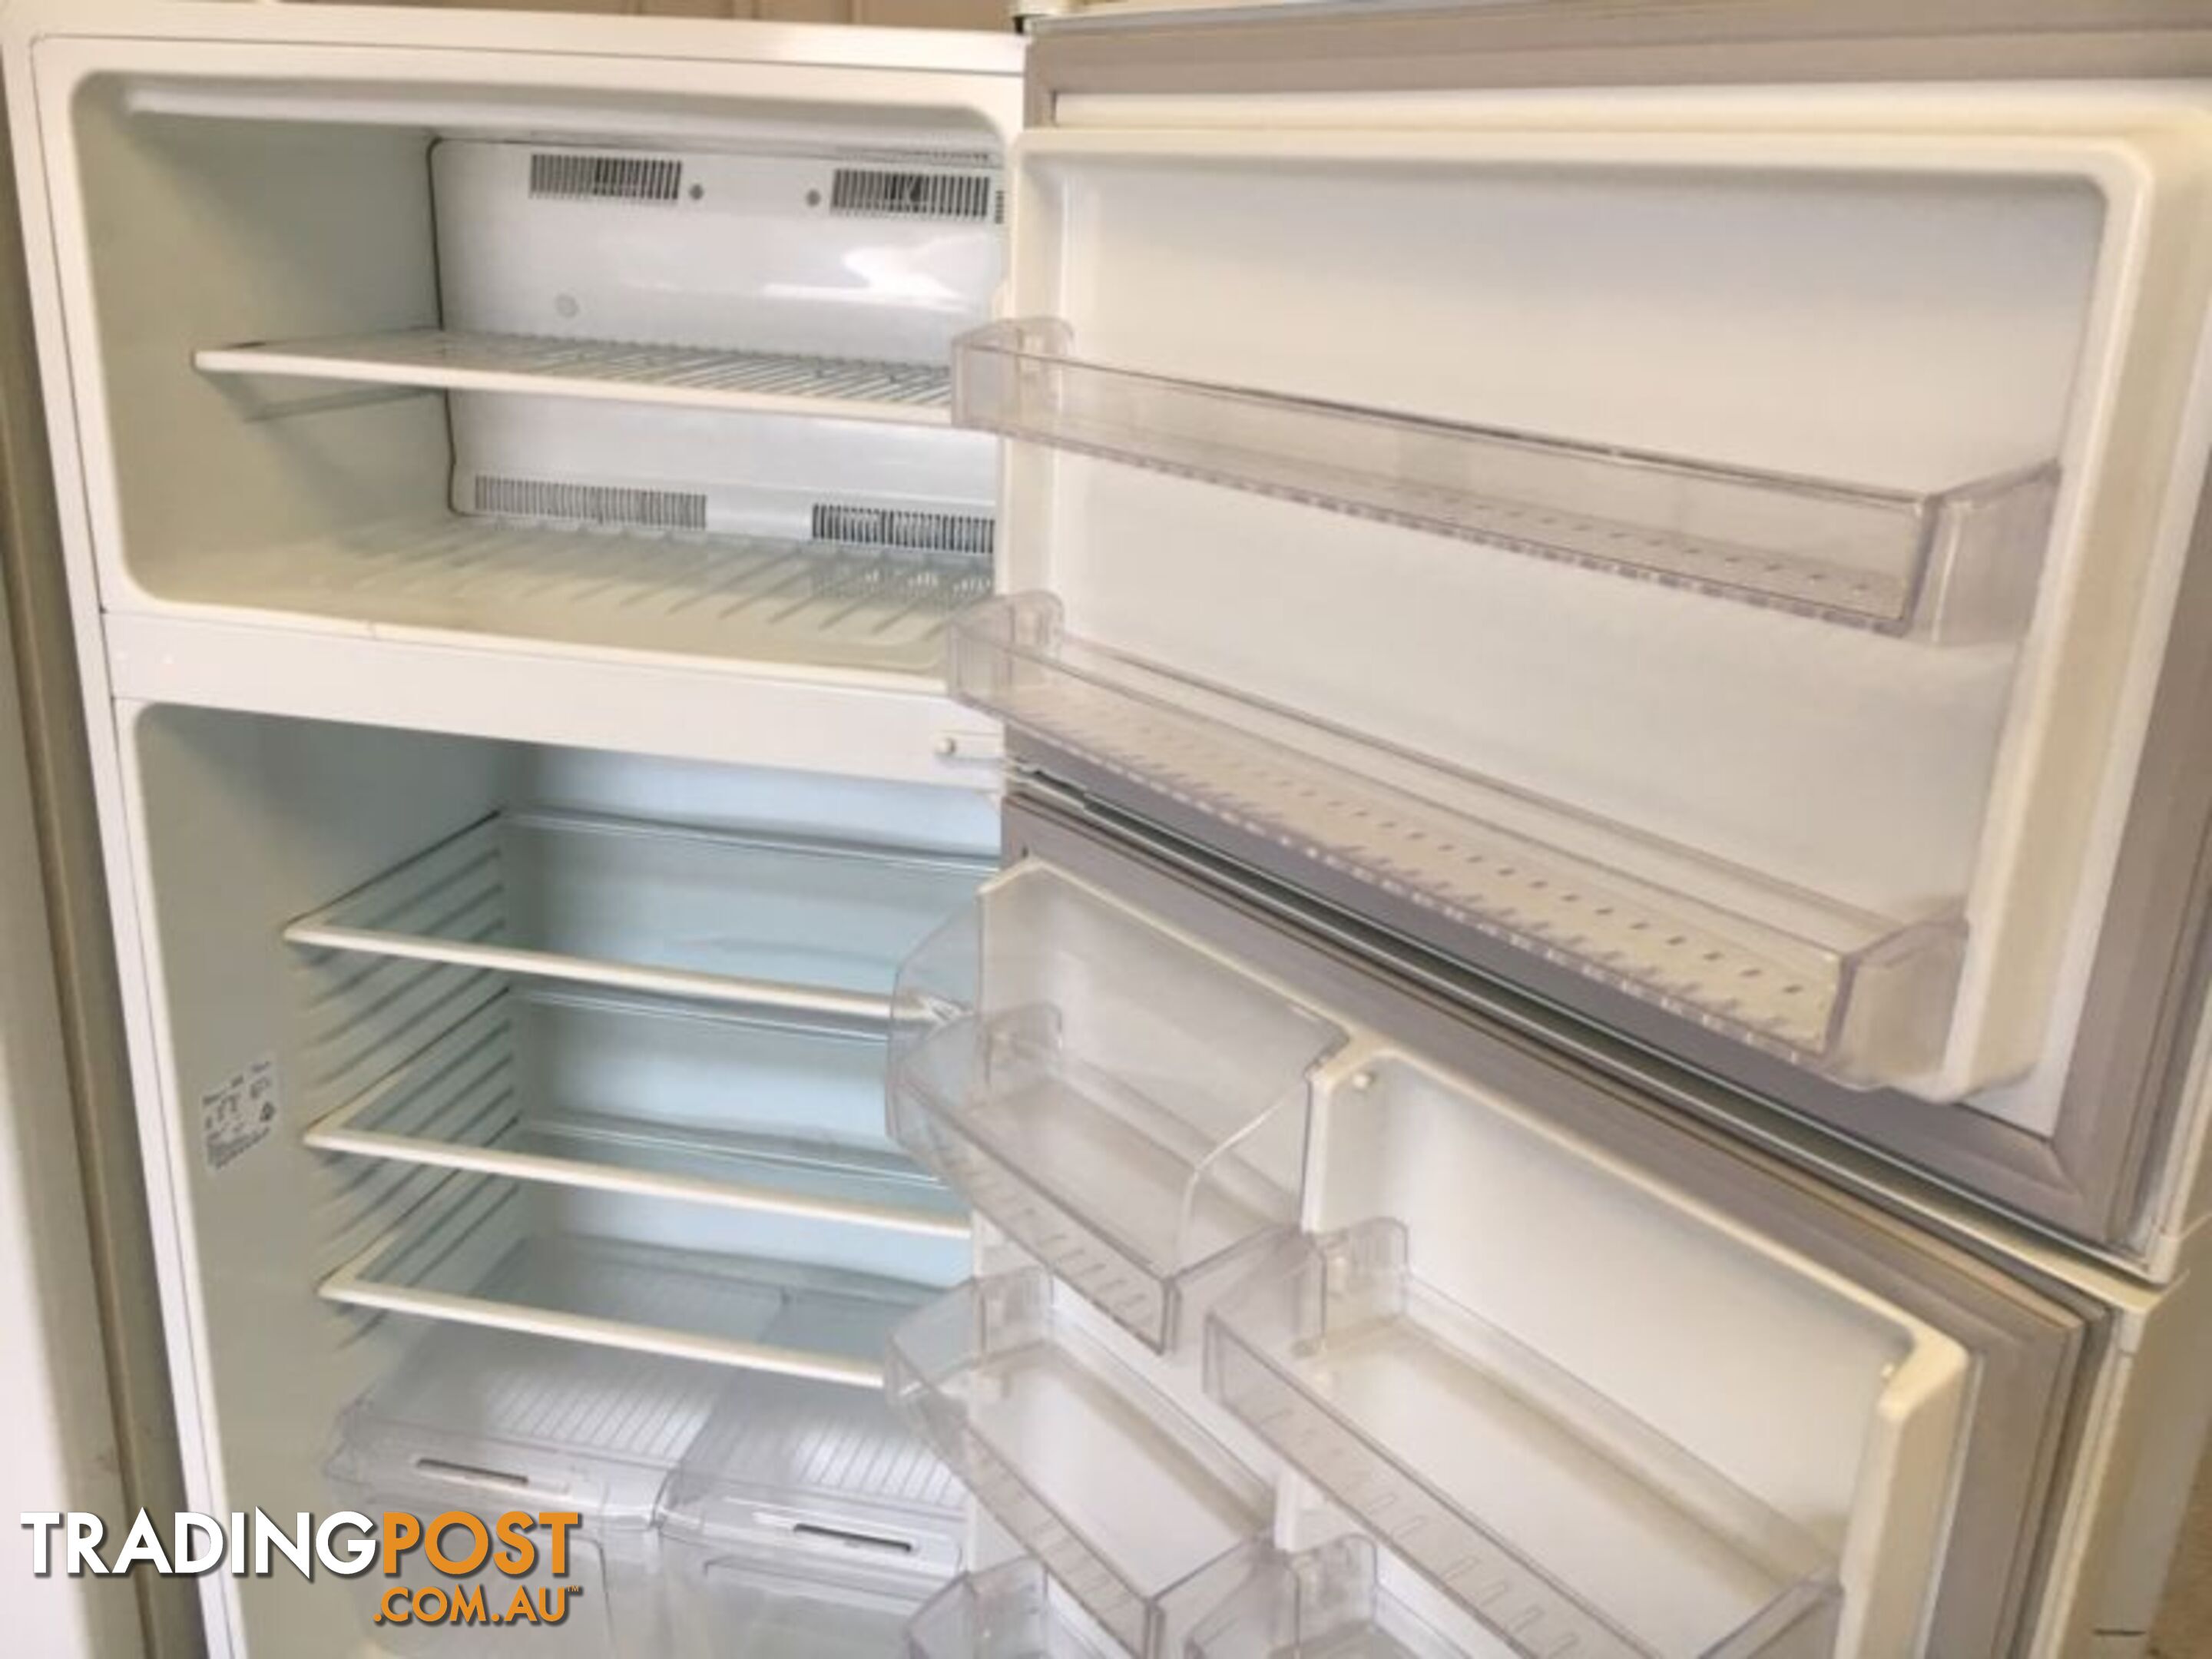 520l Kelvinator fridge freezer